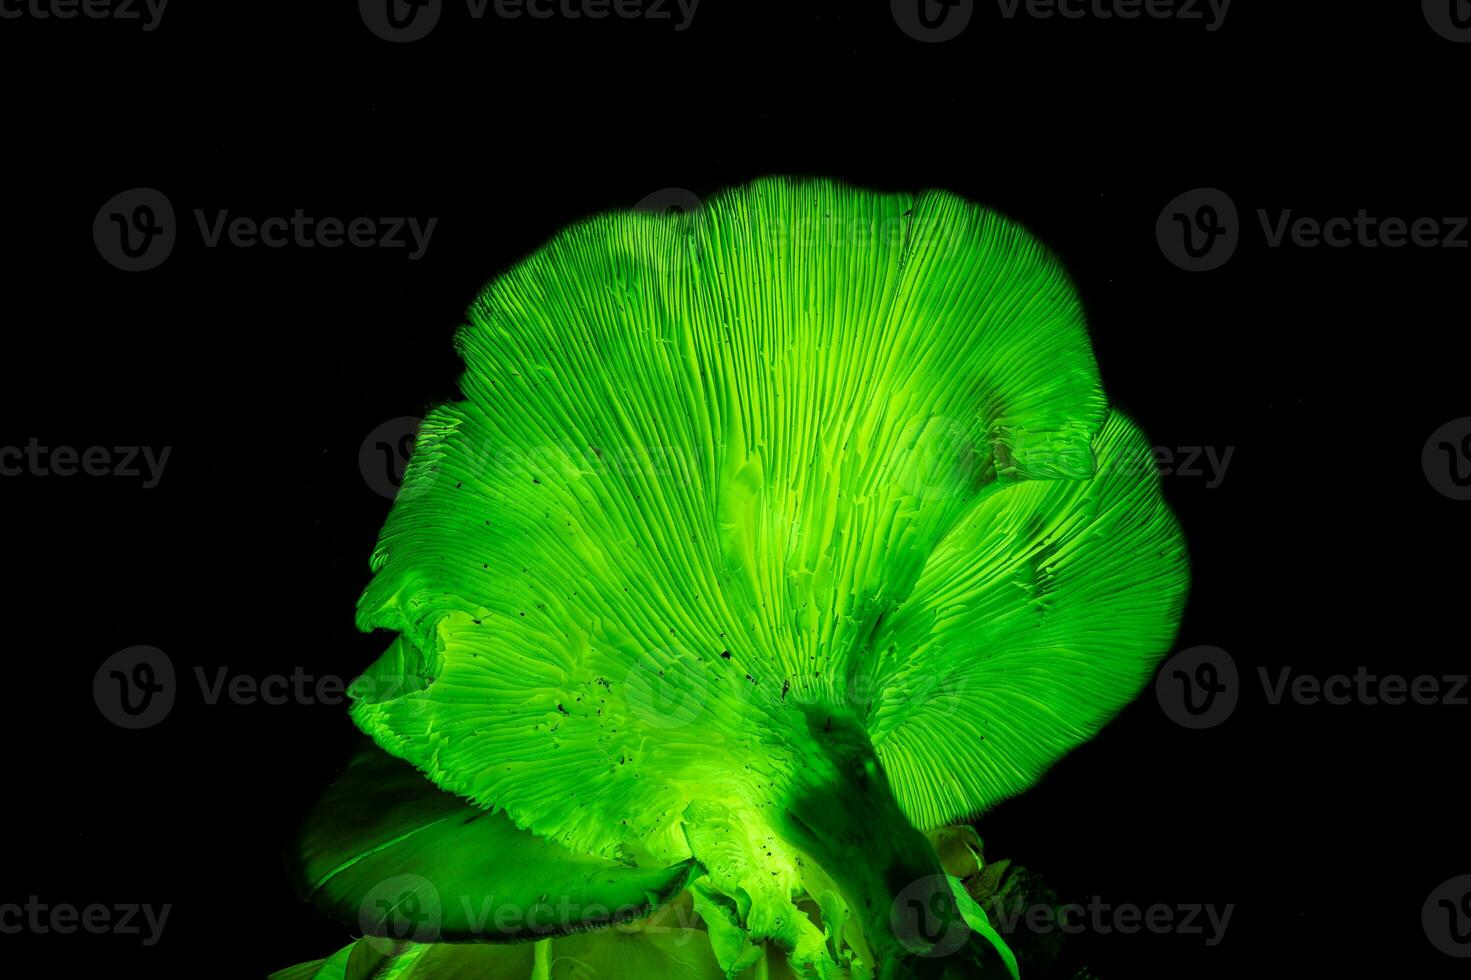 Bioluminescence Ghost mushroom, Ghost Fungus at night - Omphalotus nidiformis - bioluminescent, poisonous fungus  found in NSW, Australia photo